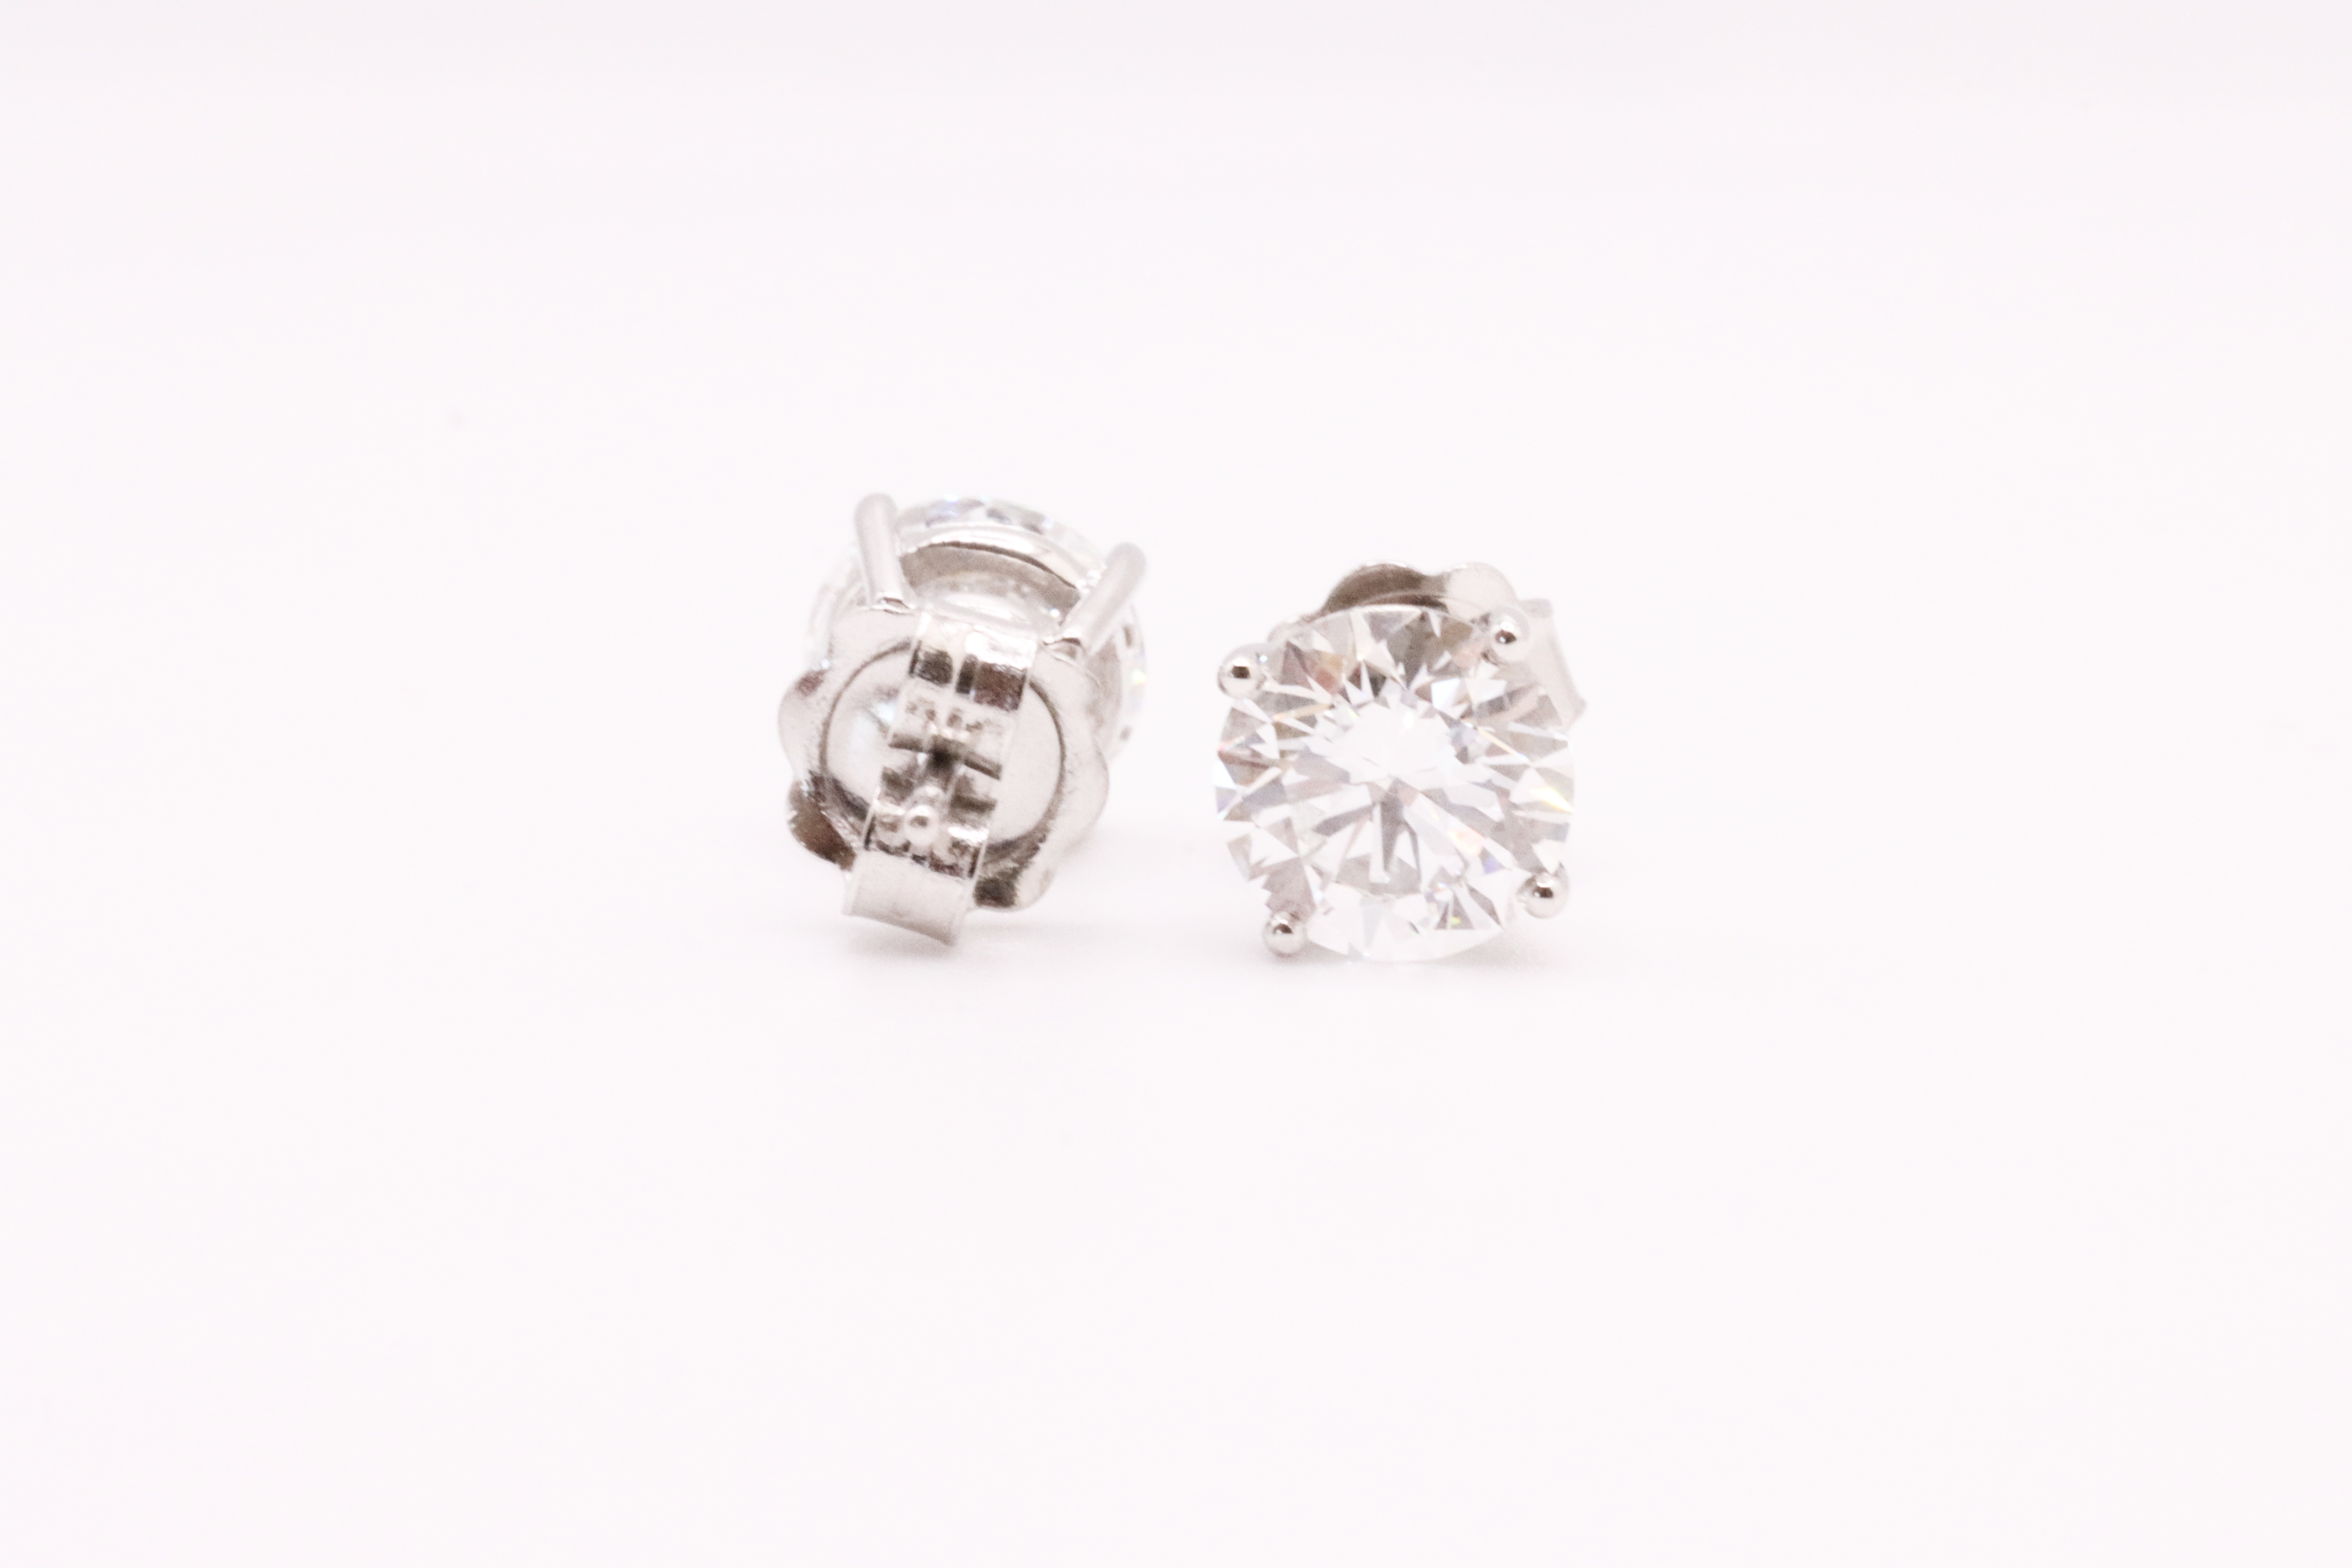 Round Brilliant Cut 2.00 Carat Diamond Earrings Set in 18kt White Gold - F Colour VVS2 Clarity - IGI - Image 4 of 5